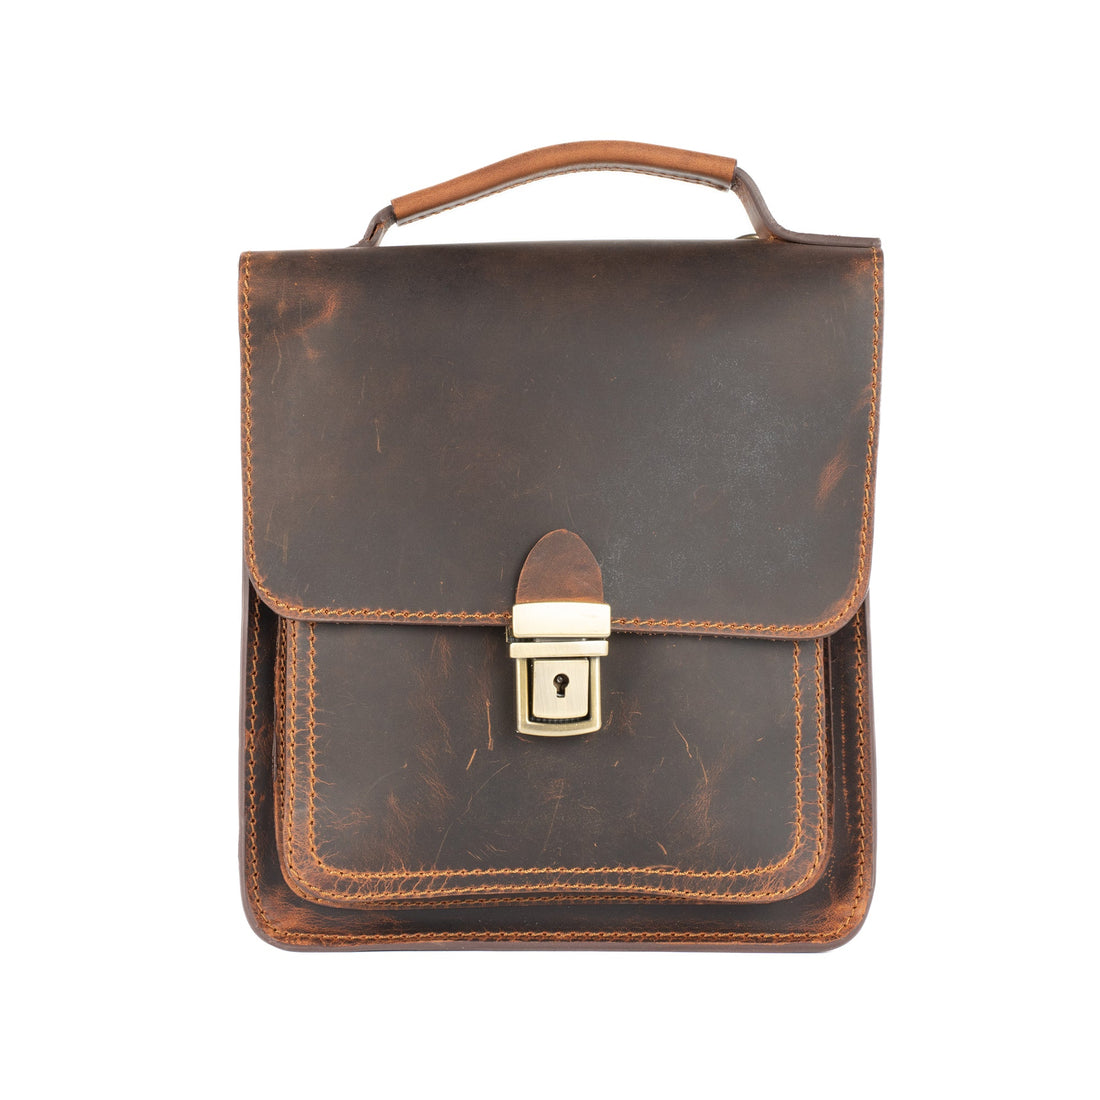 Zephyrion Leather Messenger Bag - Brown - Bags Zengoda Shop online from Artisan Brands